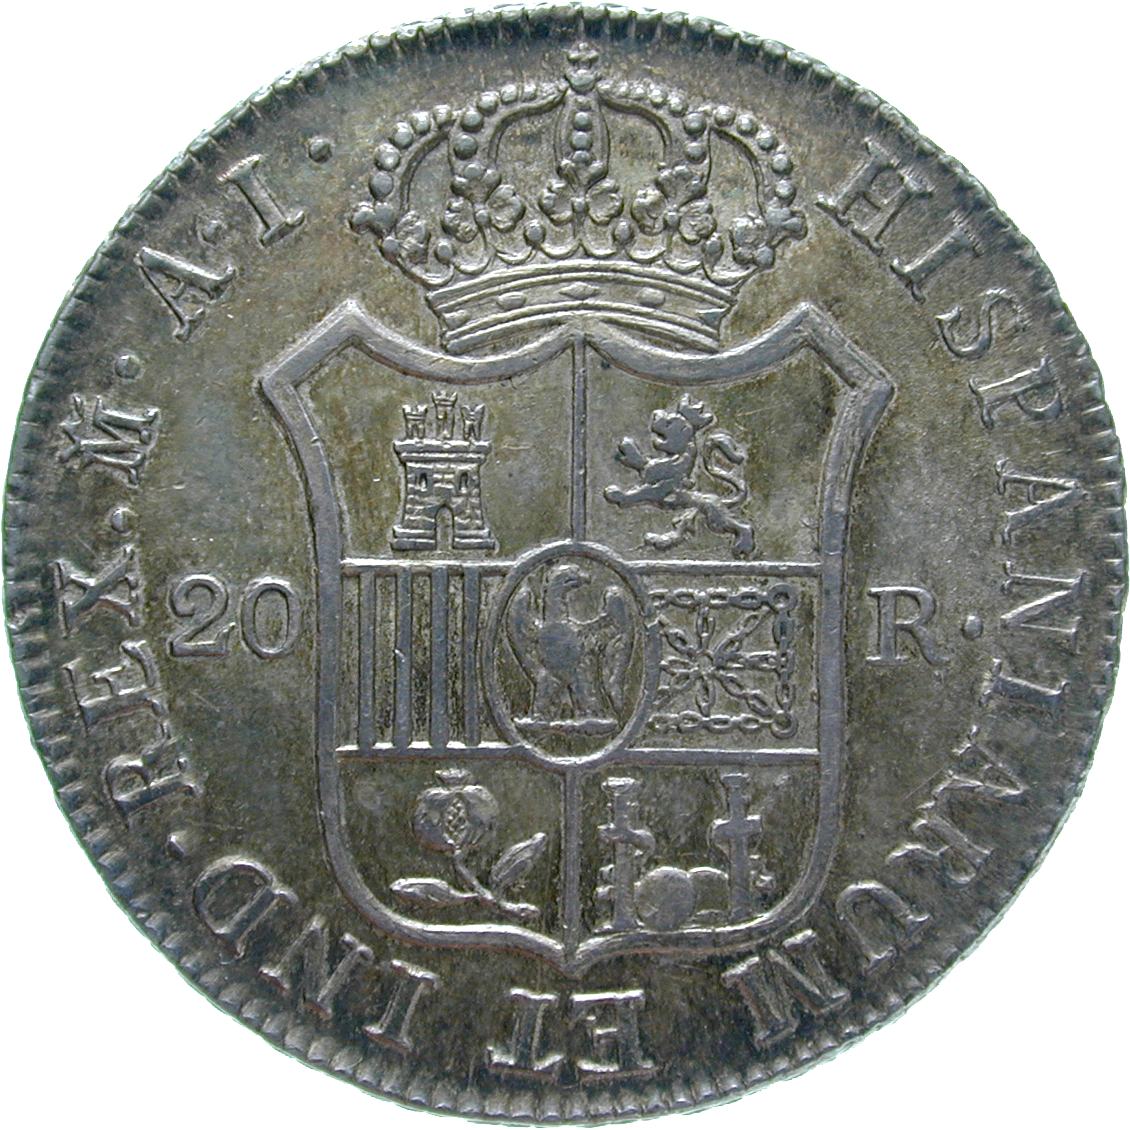 Königreich Spanien, Joseph Bonaparte, 20 Reales 1810 (reverse)